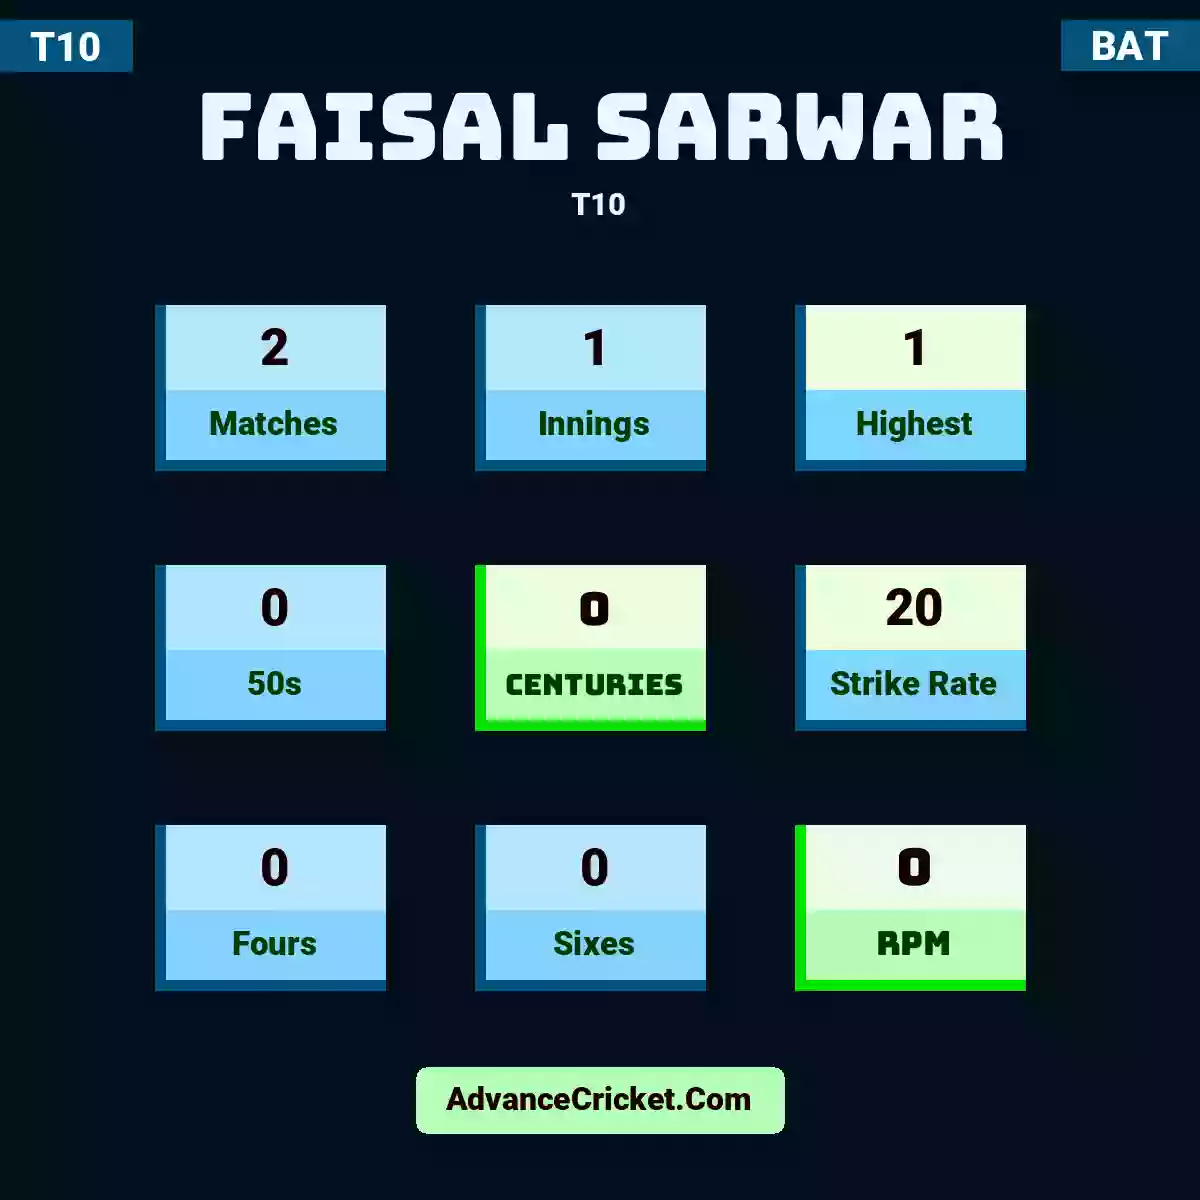 Faisal Sarwar T10 , Faisal Sarwar played 2 matches, scored 1 runs as highest, 0 half-centuries, and 0 centuries, with a strike rate of 20. F.Sarwar hit 0 fours and 0 sixes, with an RPM of 0.